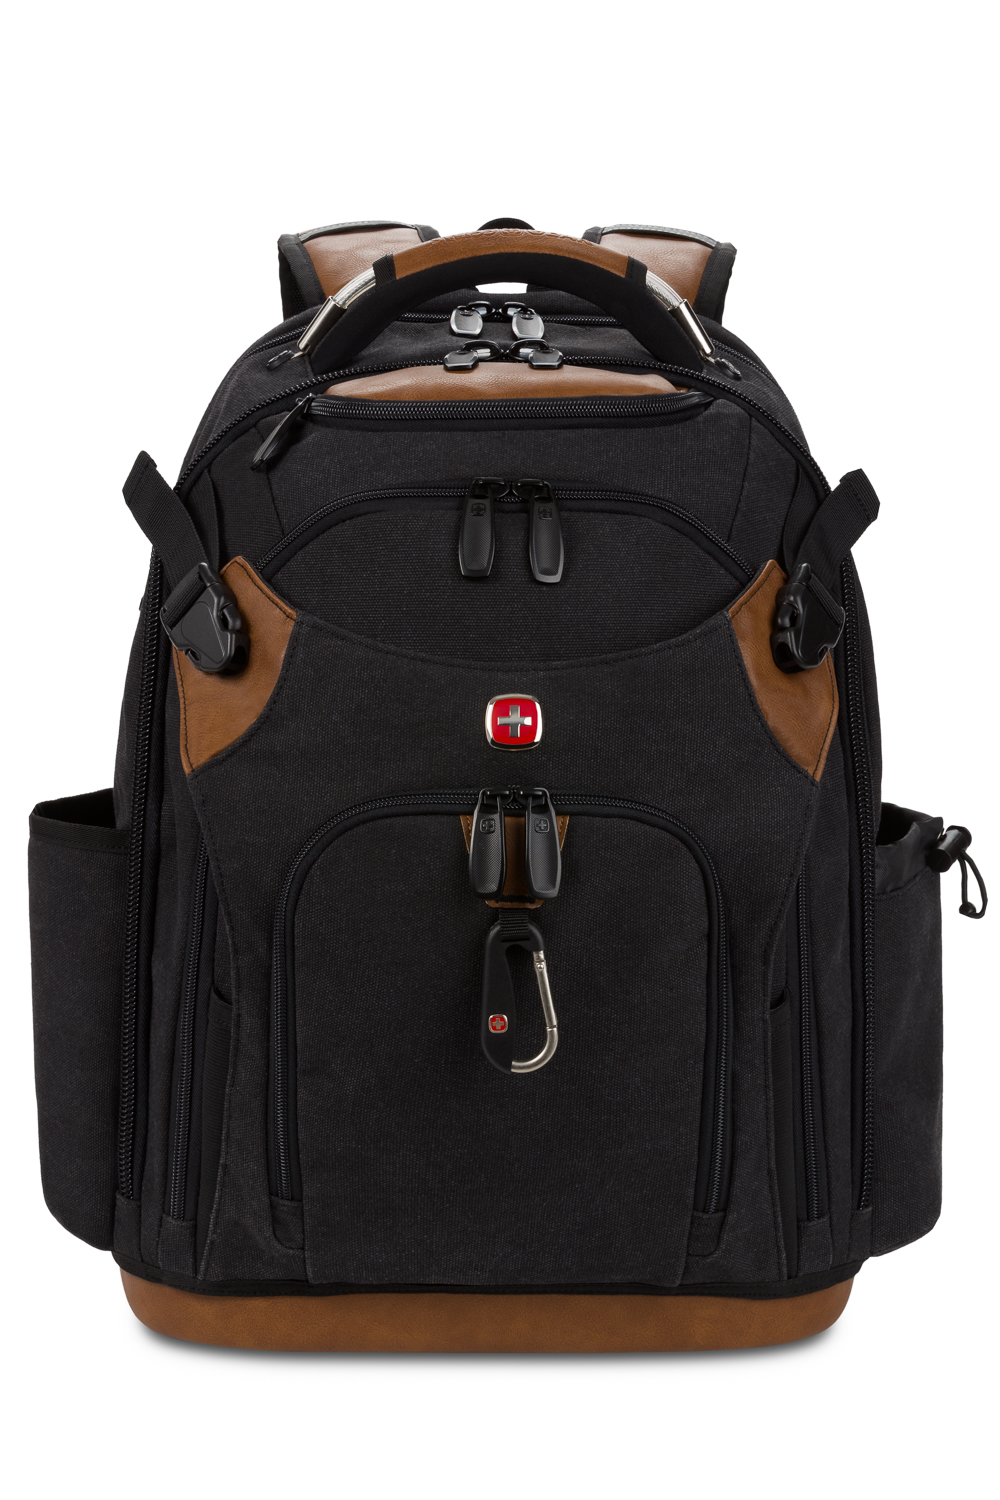 Swissgear 3636 USB Work Pack Pro Tool Backpack - Black Canvas